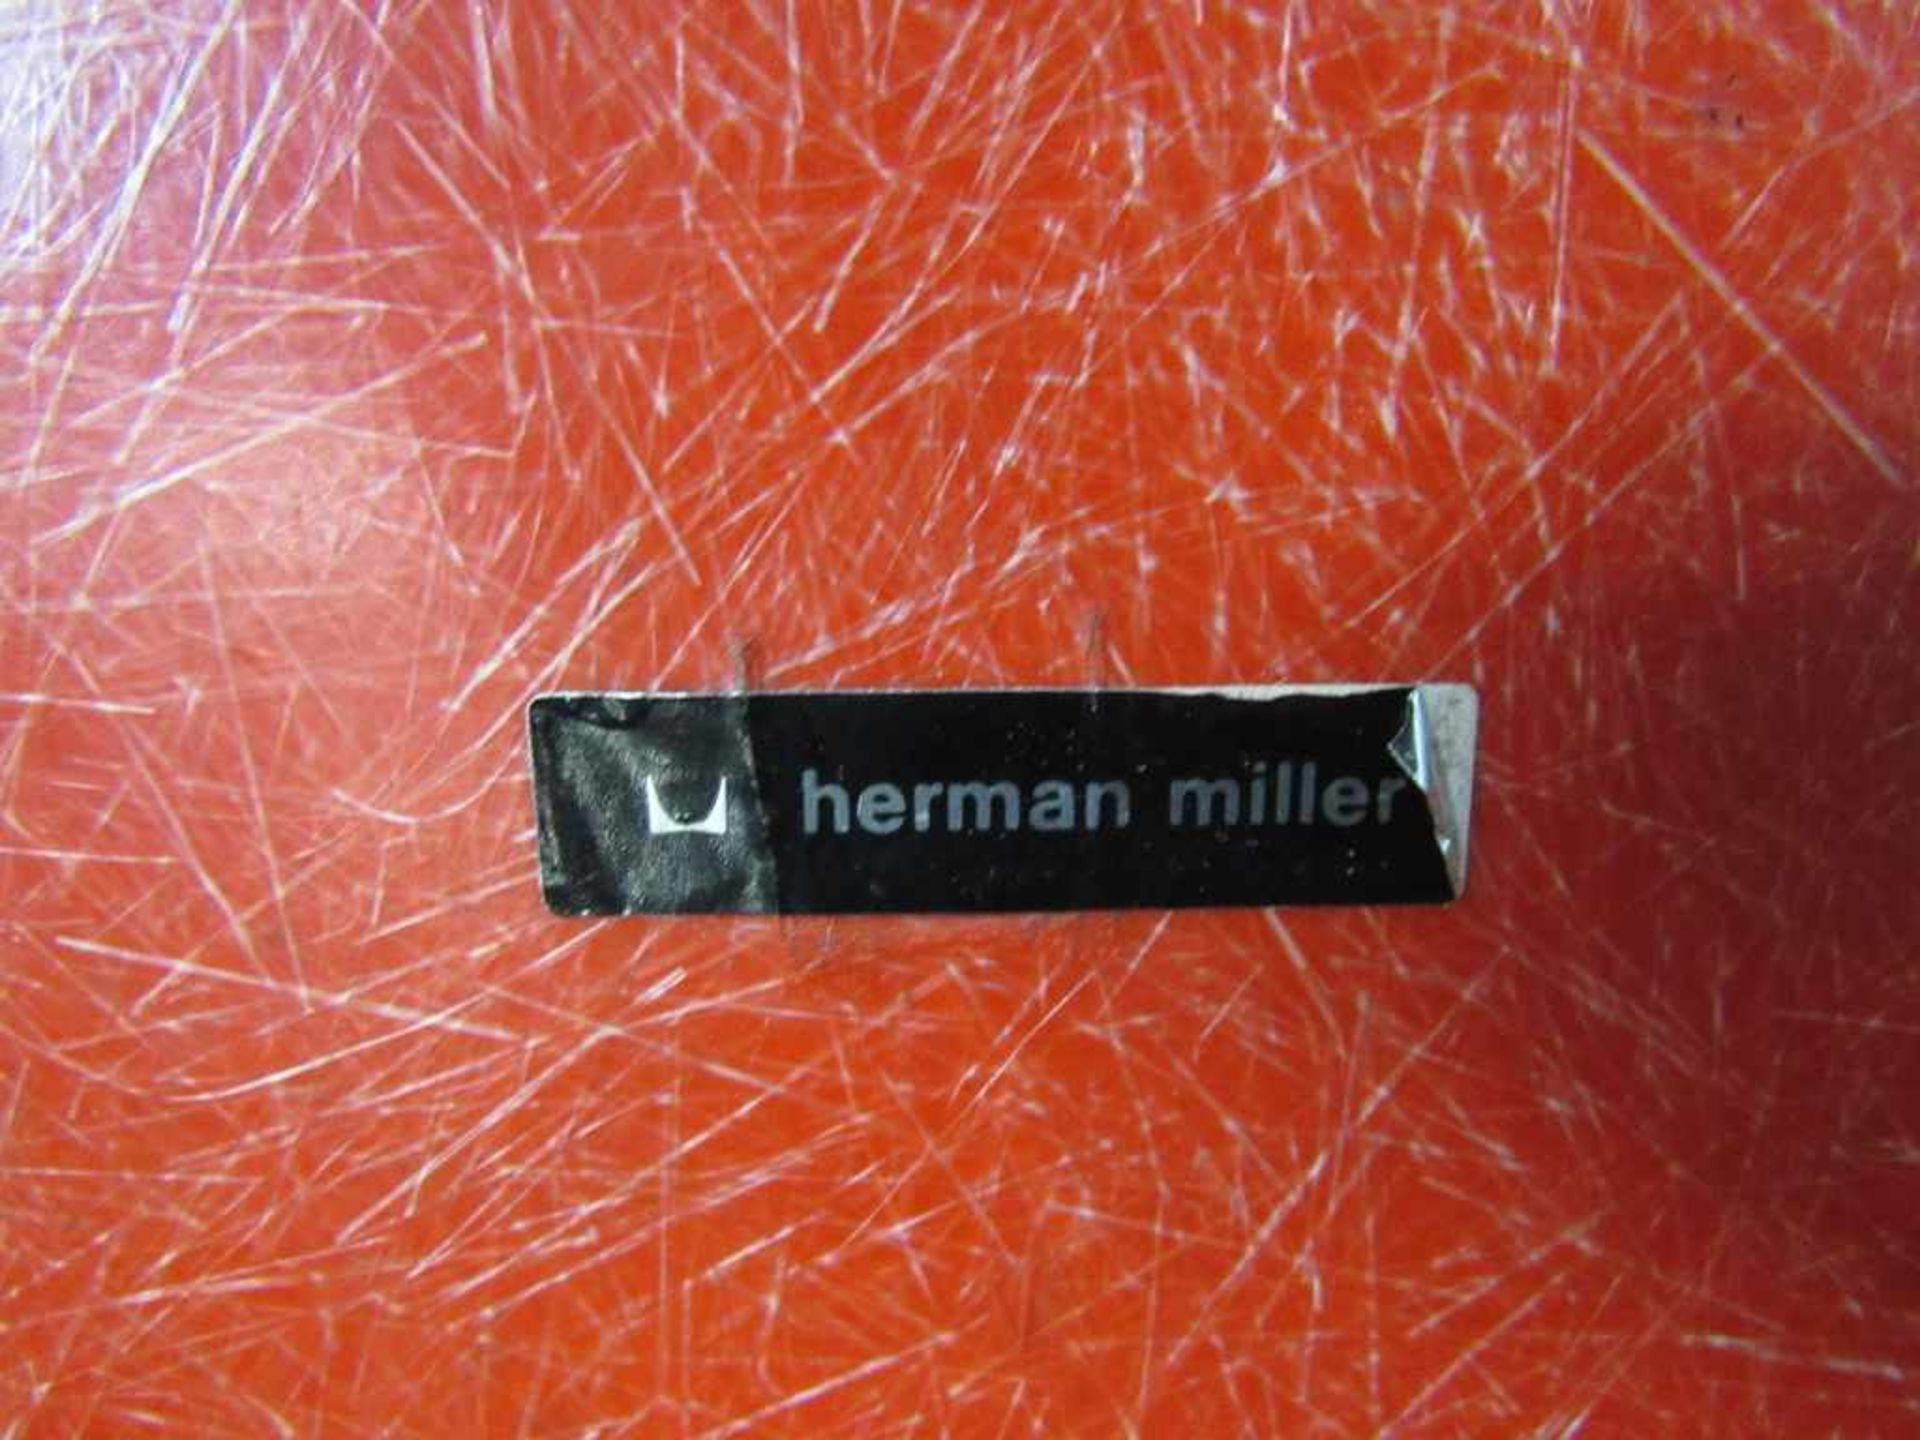 Stuhl Hermann Miller Space Age rote Fiberglasschale bezogen 60er Jahre Eams gelabelt auf La Fonda - Image 5 of 5